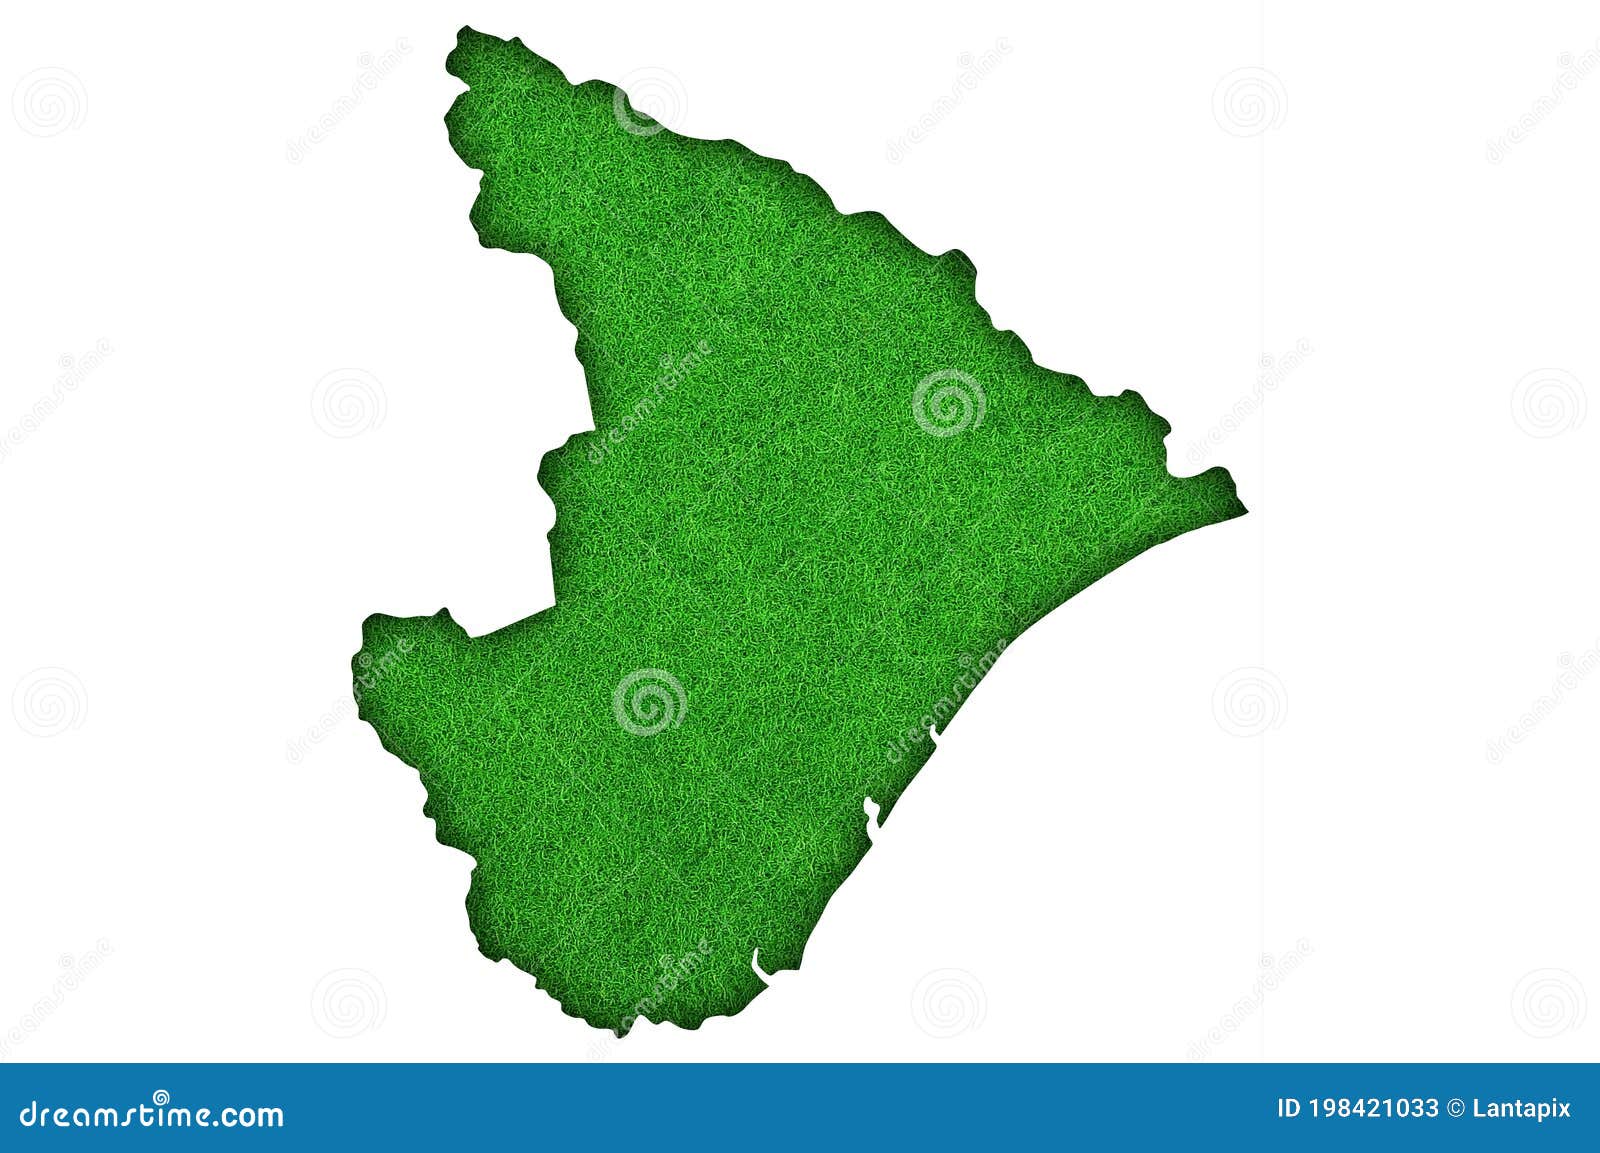 map of sergipe on green felt